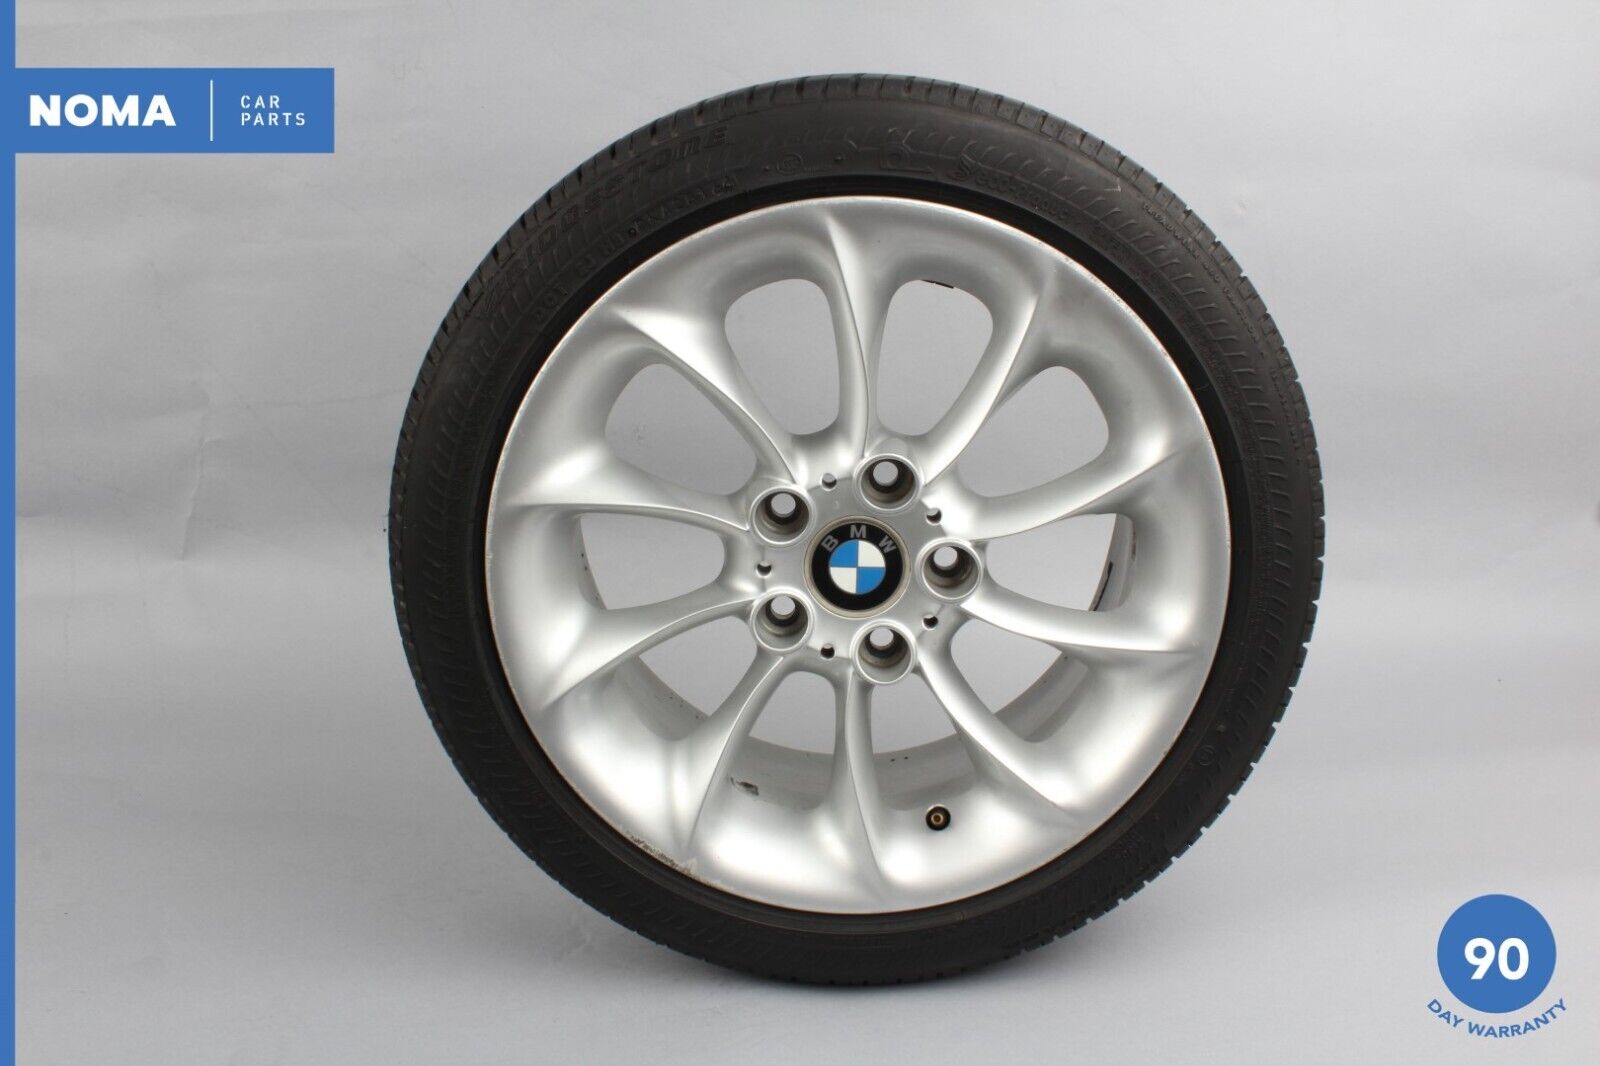 03-08 BMW Z4 E85 8Jx17 Light Alloy Wheel Rim Turbine Style 106 Drive Guard Tire